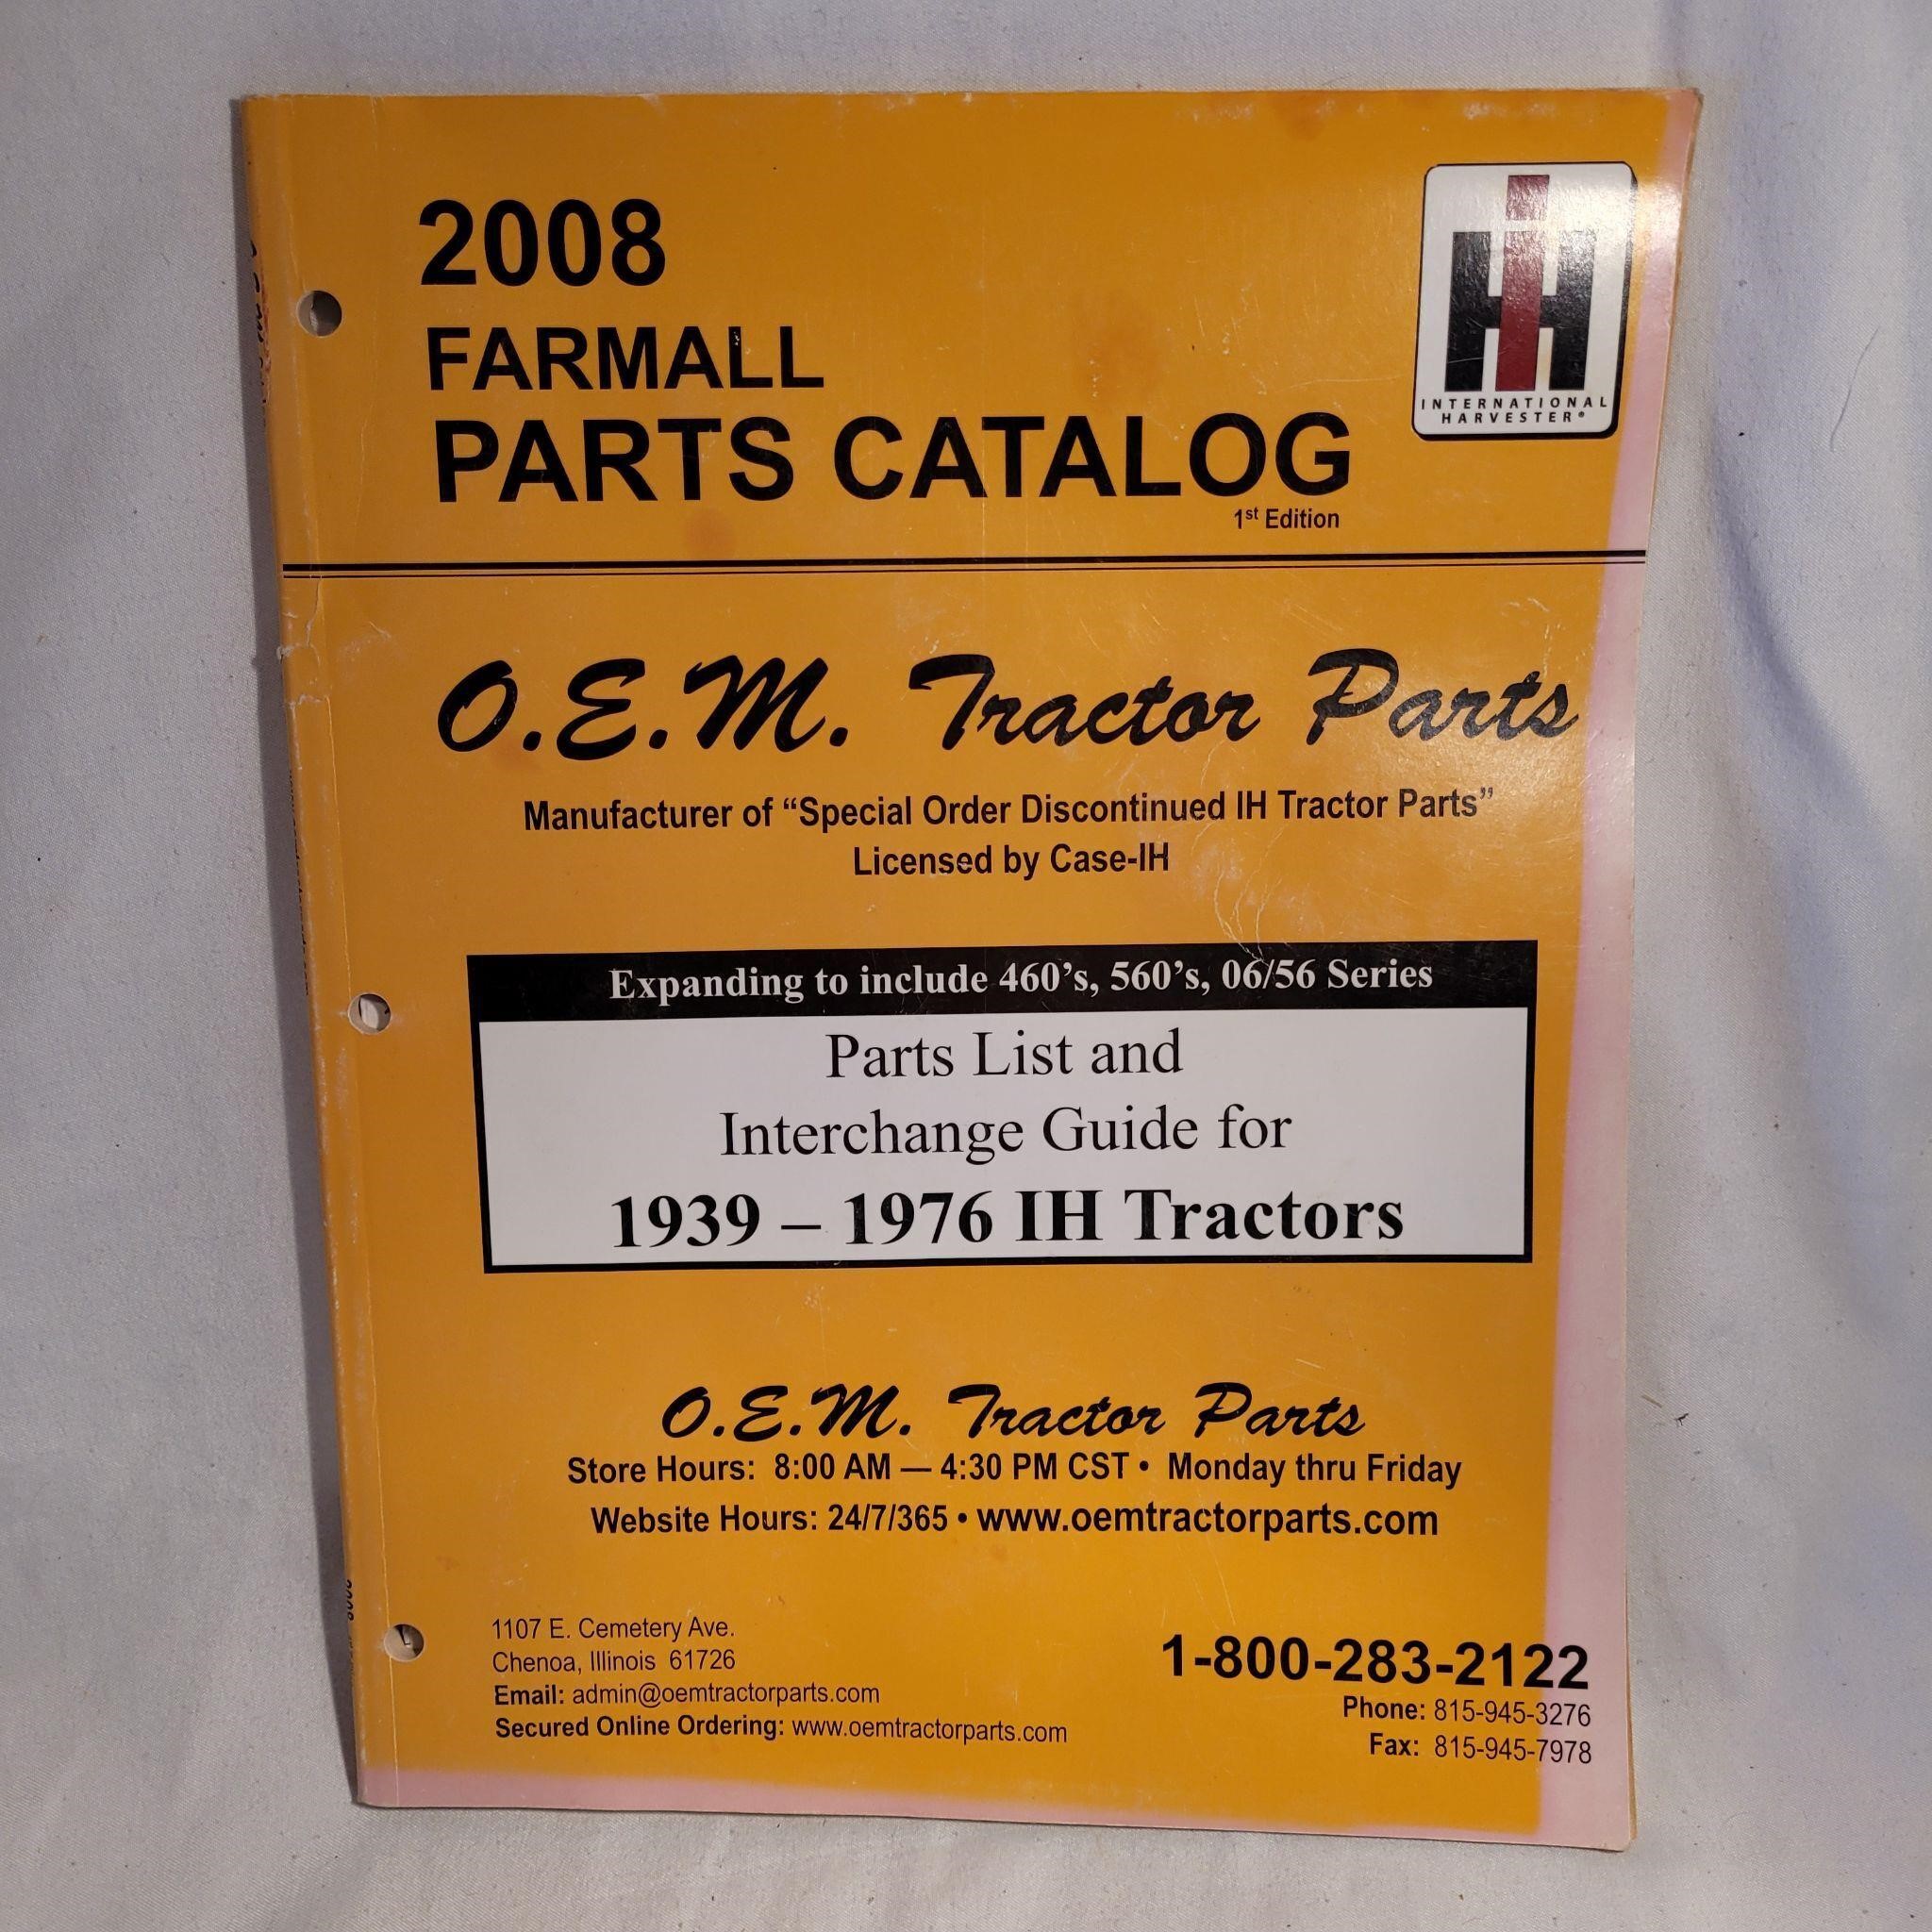 2008 Farmall parts catalog